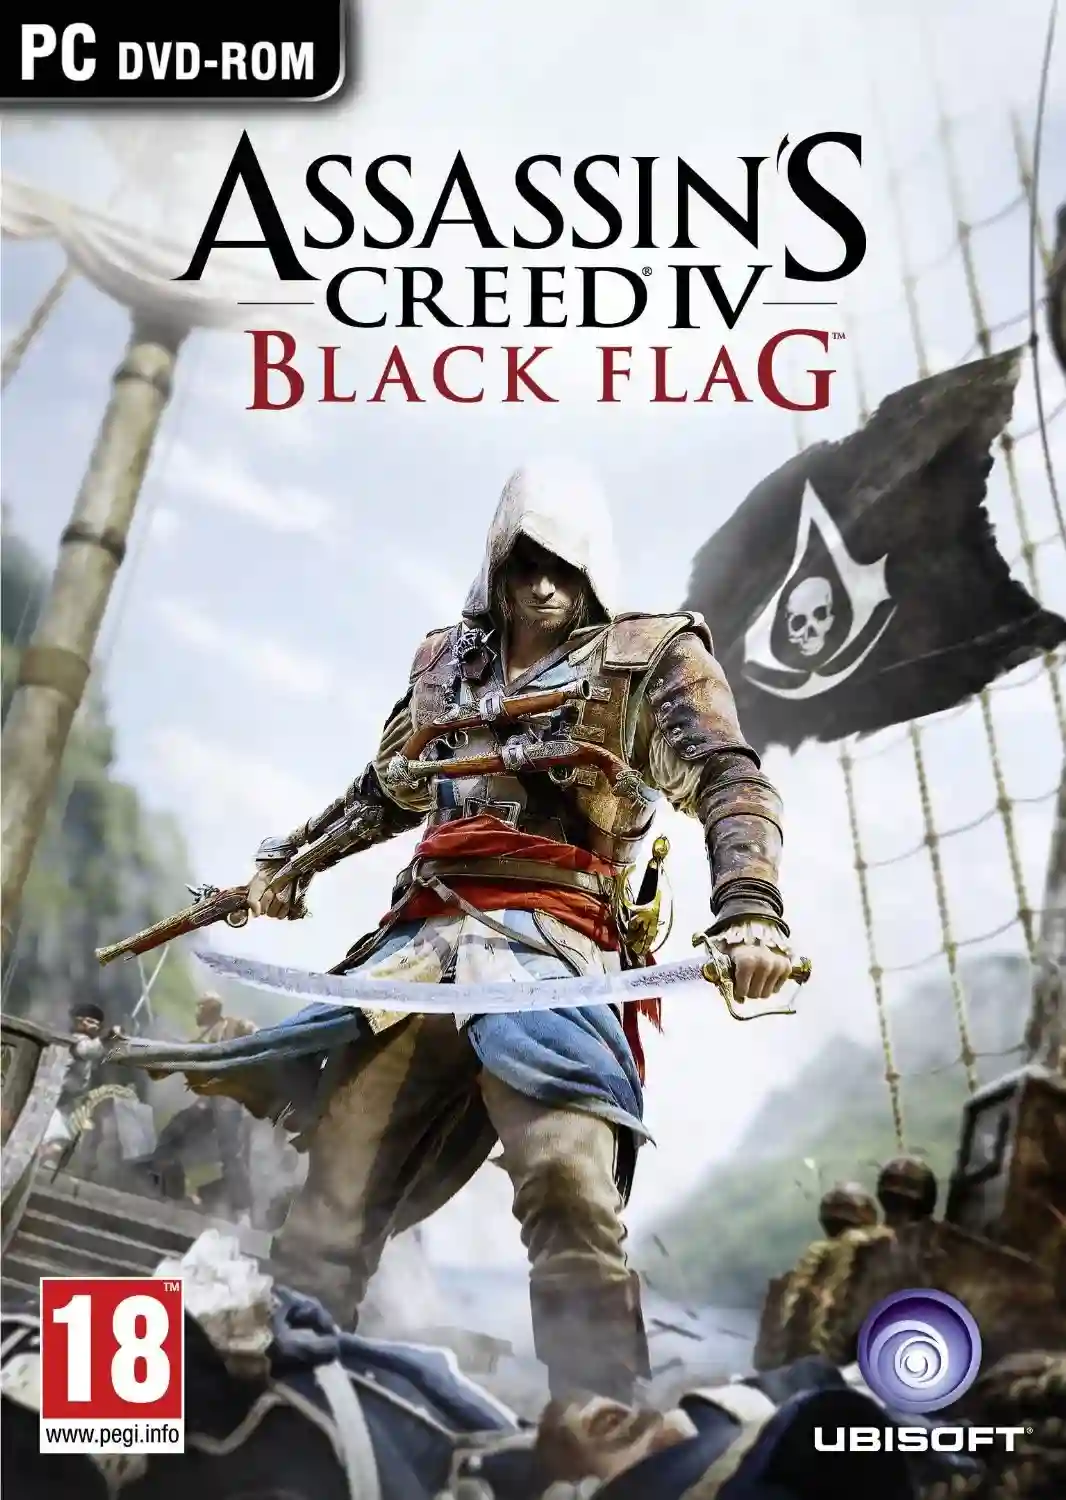 AssassinsCreed 4 Blackflag